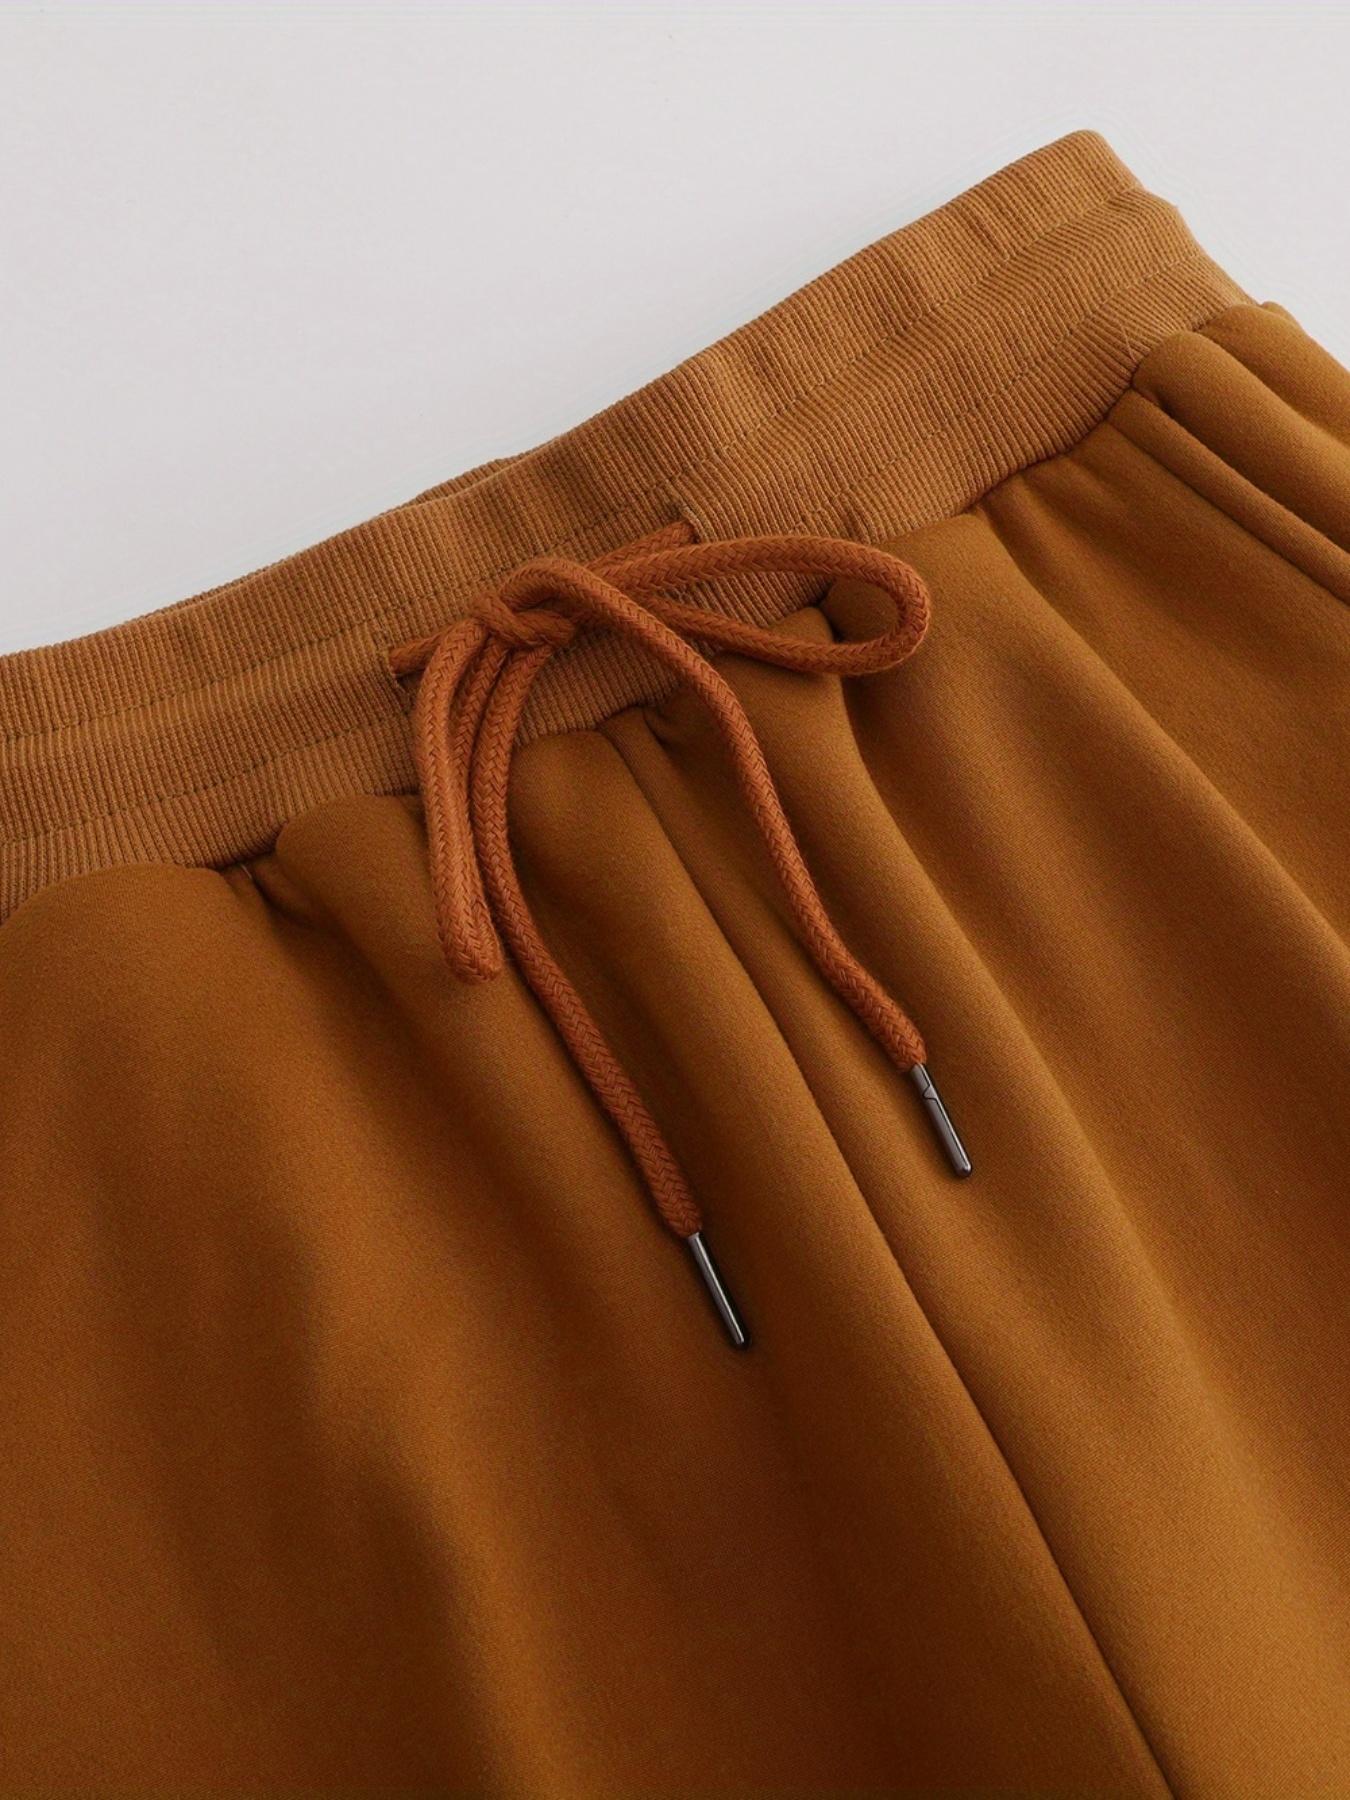 plush thermal pants, winter plush thermal pants casual drawstring pocket pants womens clothing details 16